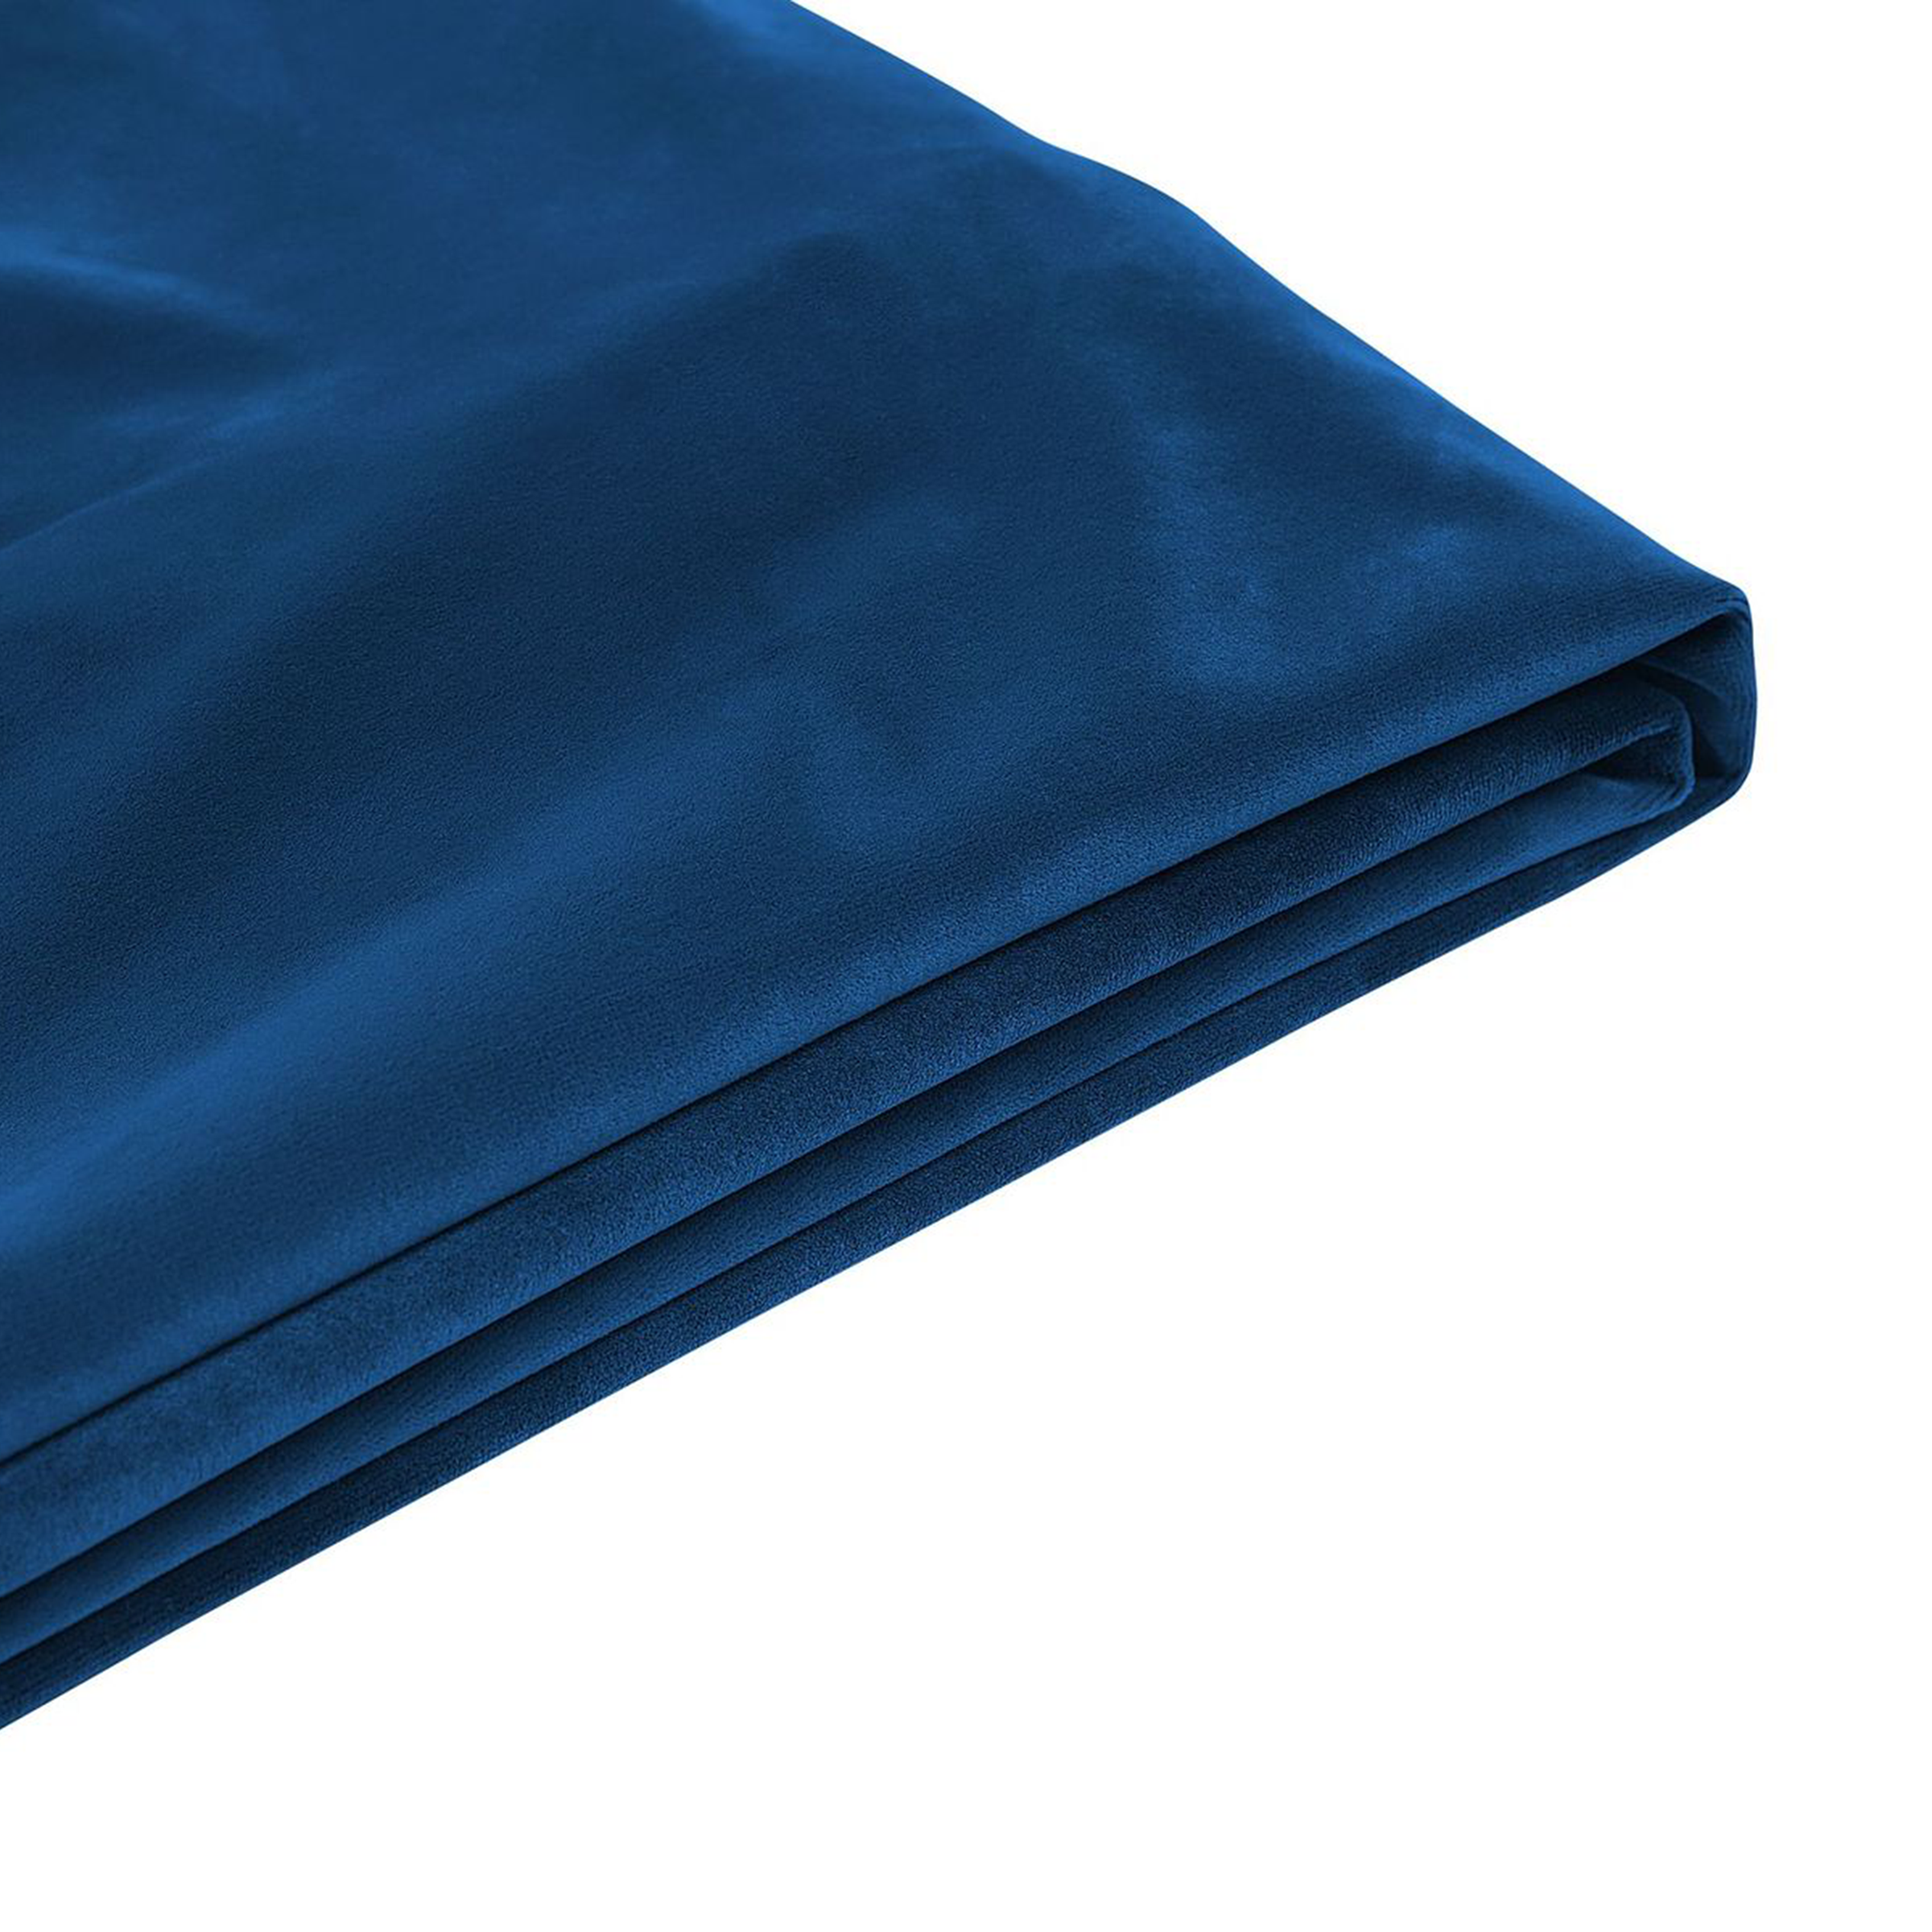 Beliani Bed Frame Cover Blue Velvet for Bed 160 x 200 cm Removable Washable